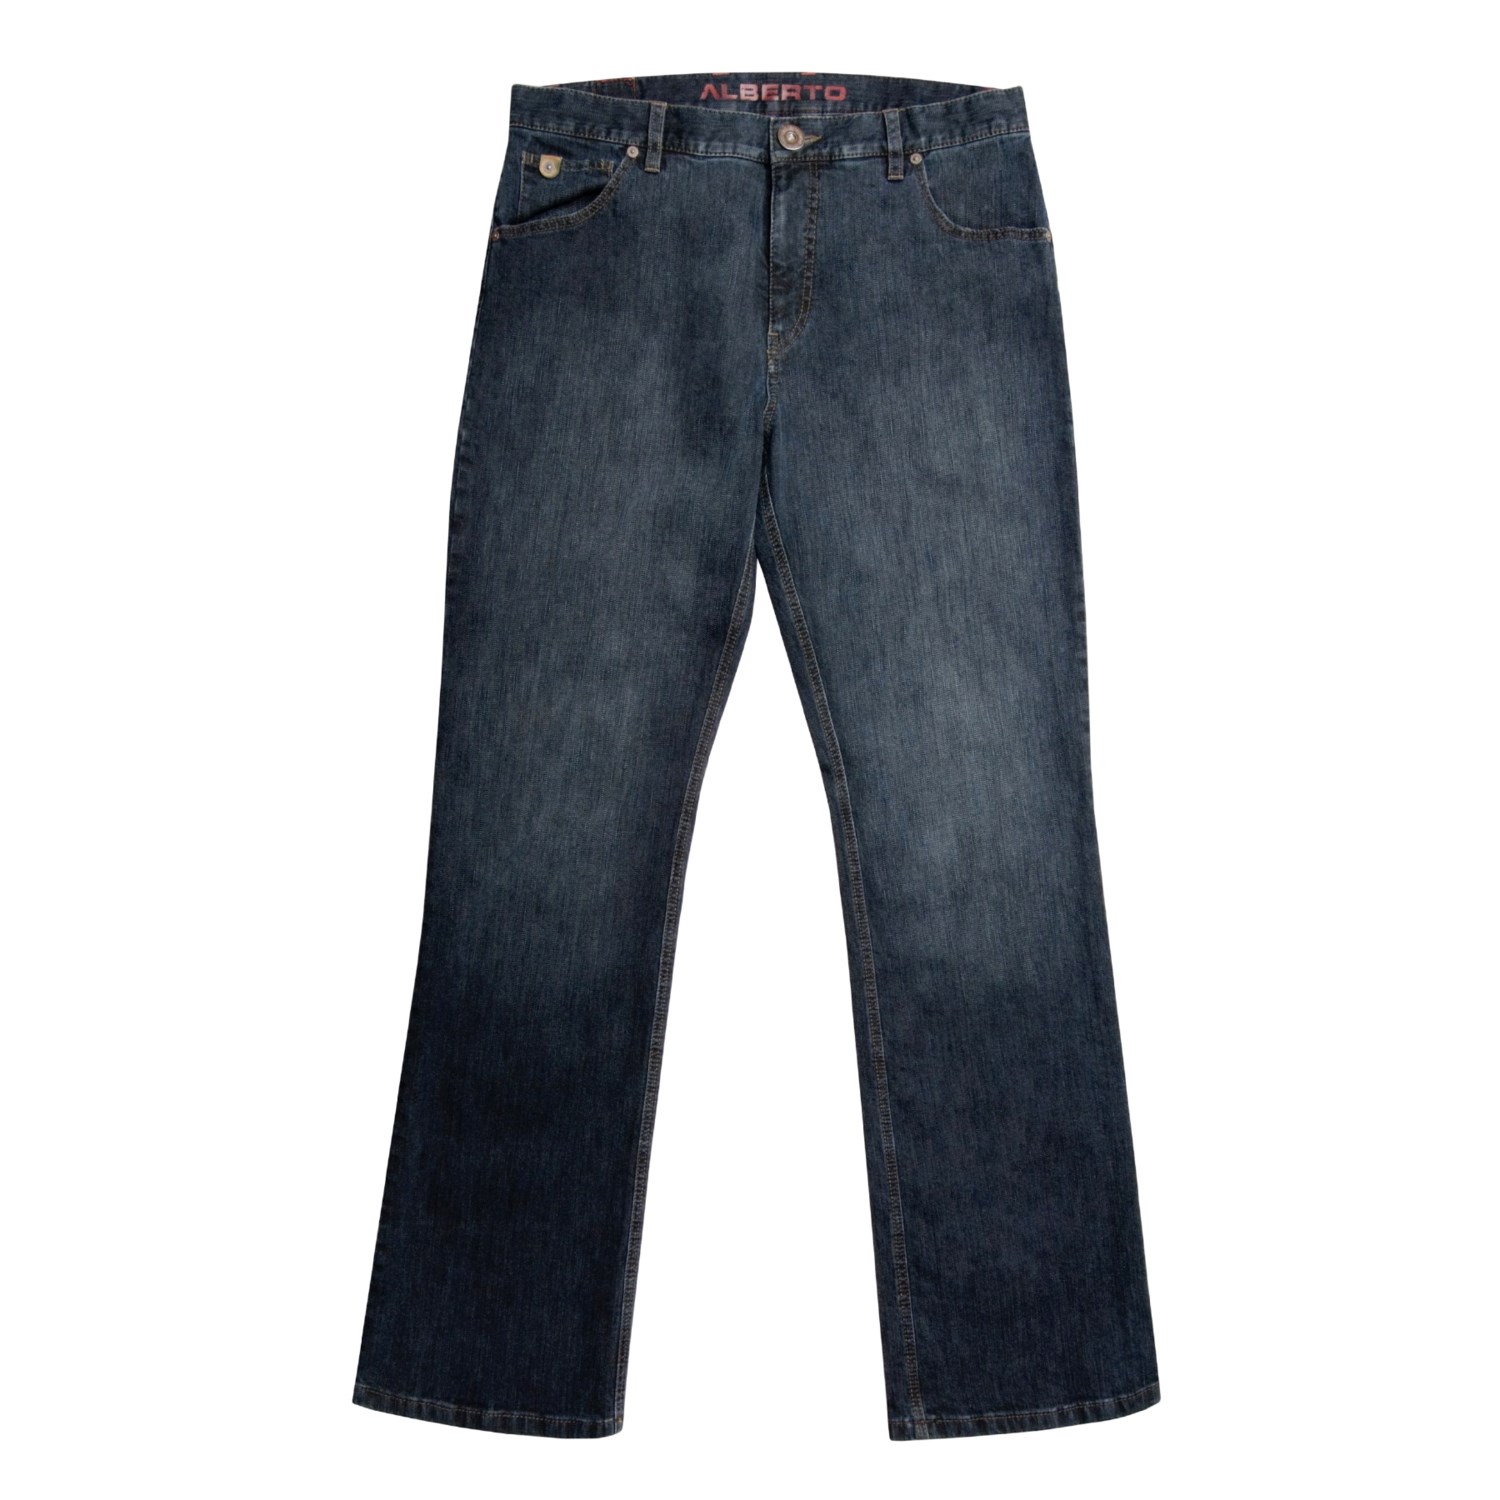 Alberto Faded Blue Wash Denim Jeans (For Men) 89999 - Save 89%